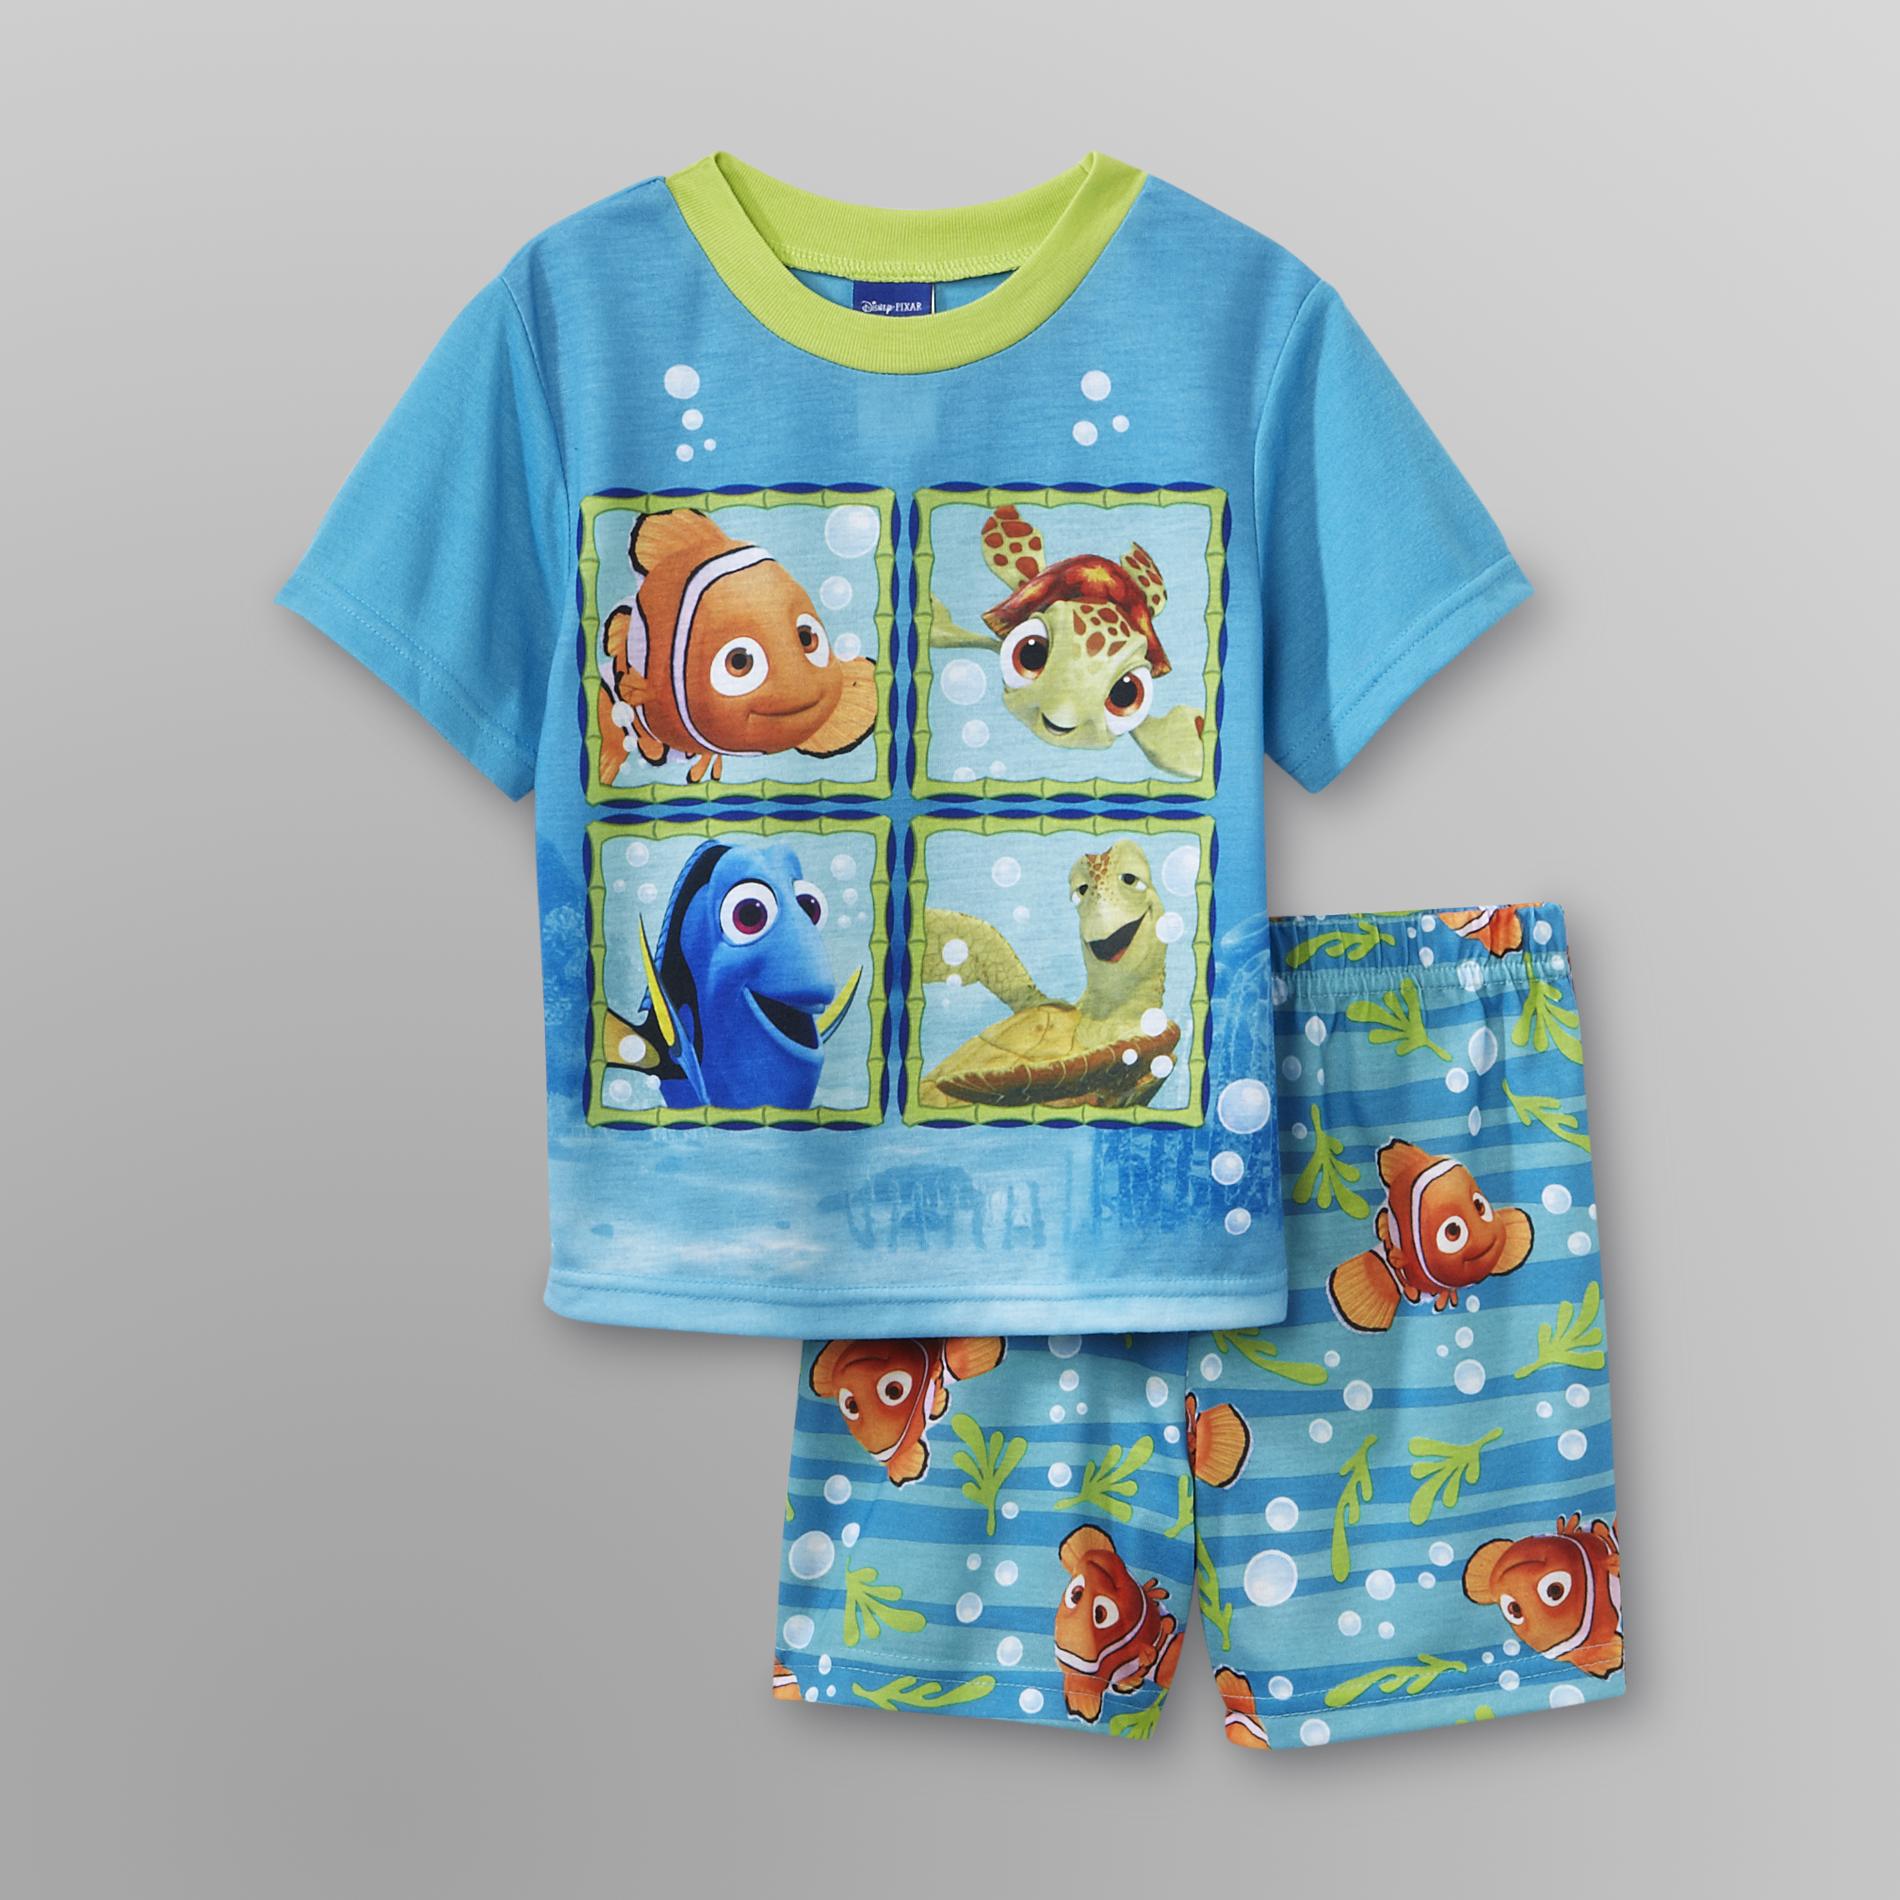 Disney Finding Nemo Toddler Boy's Pajamas